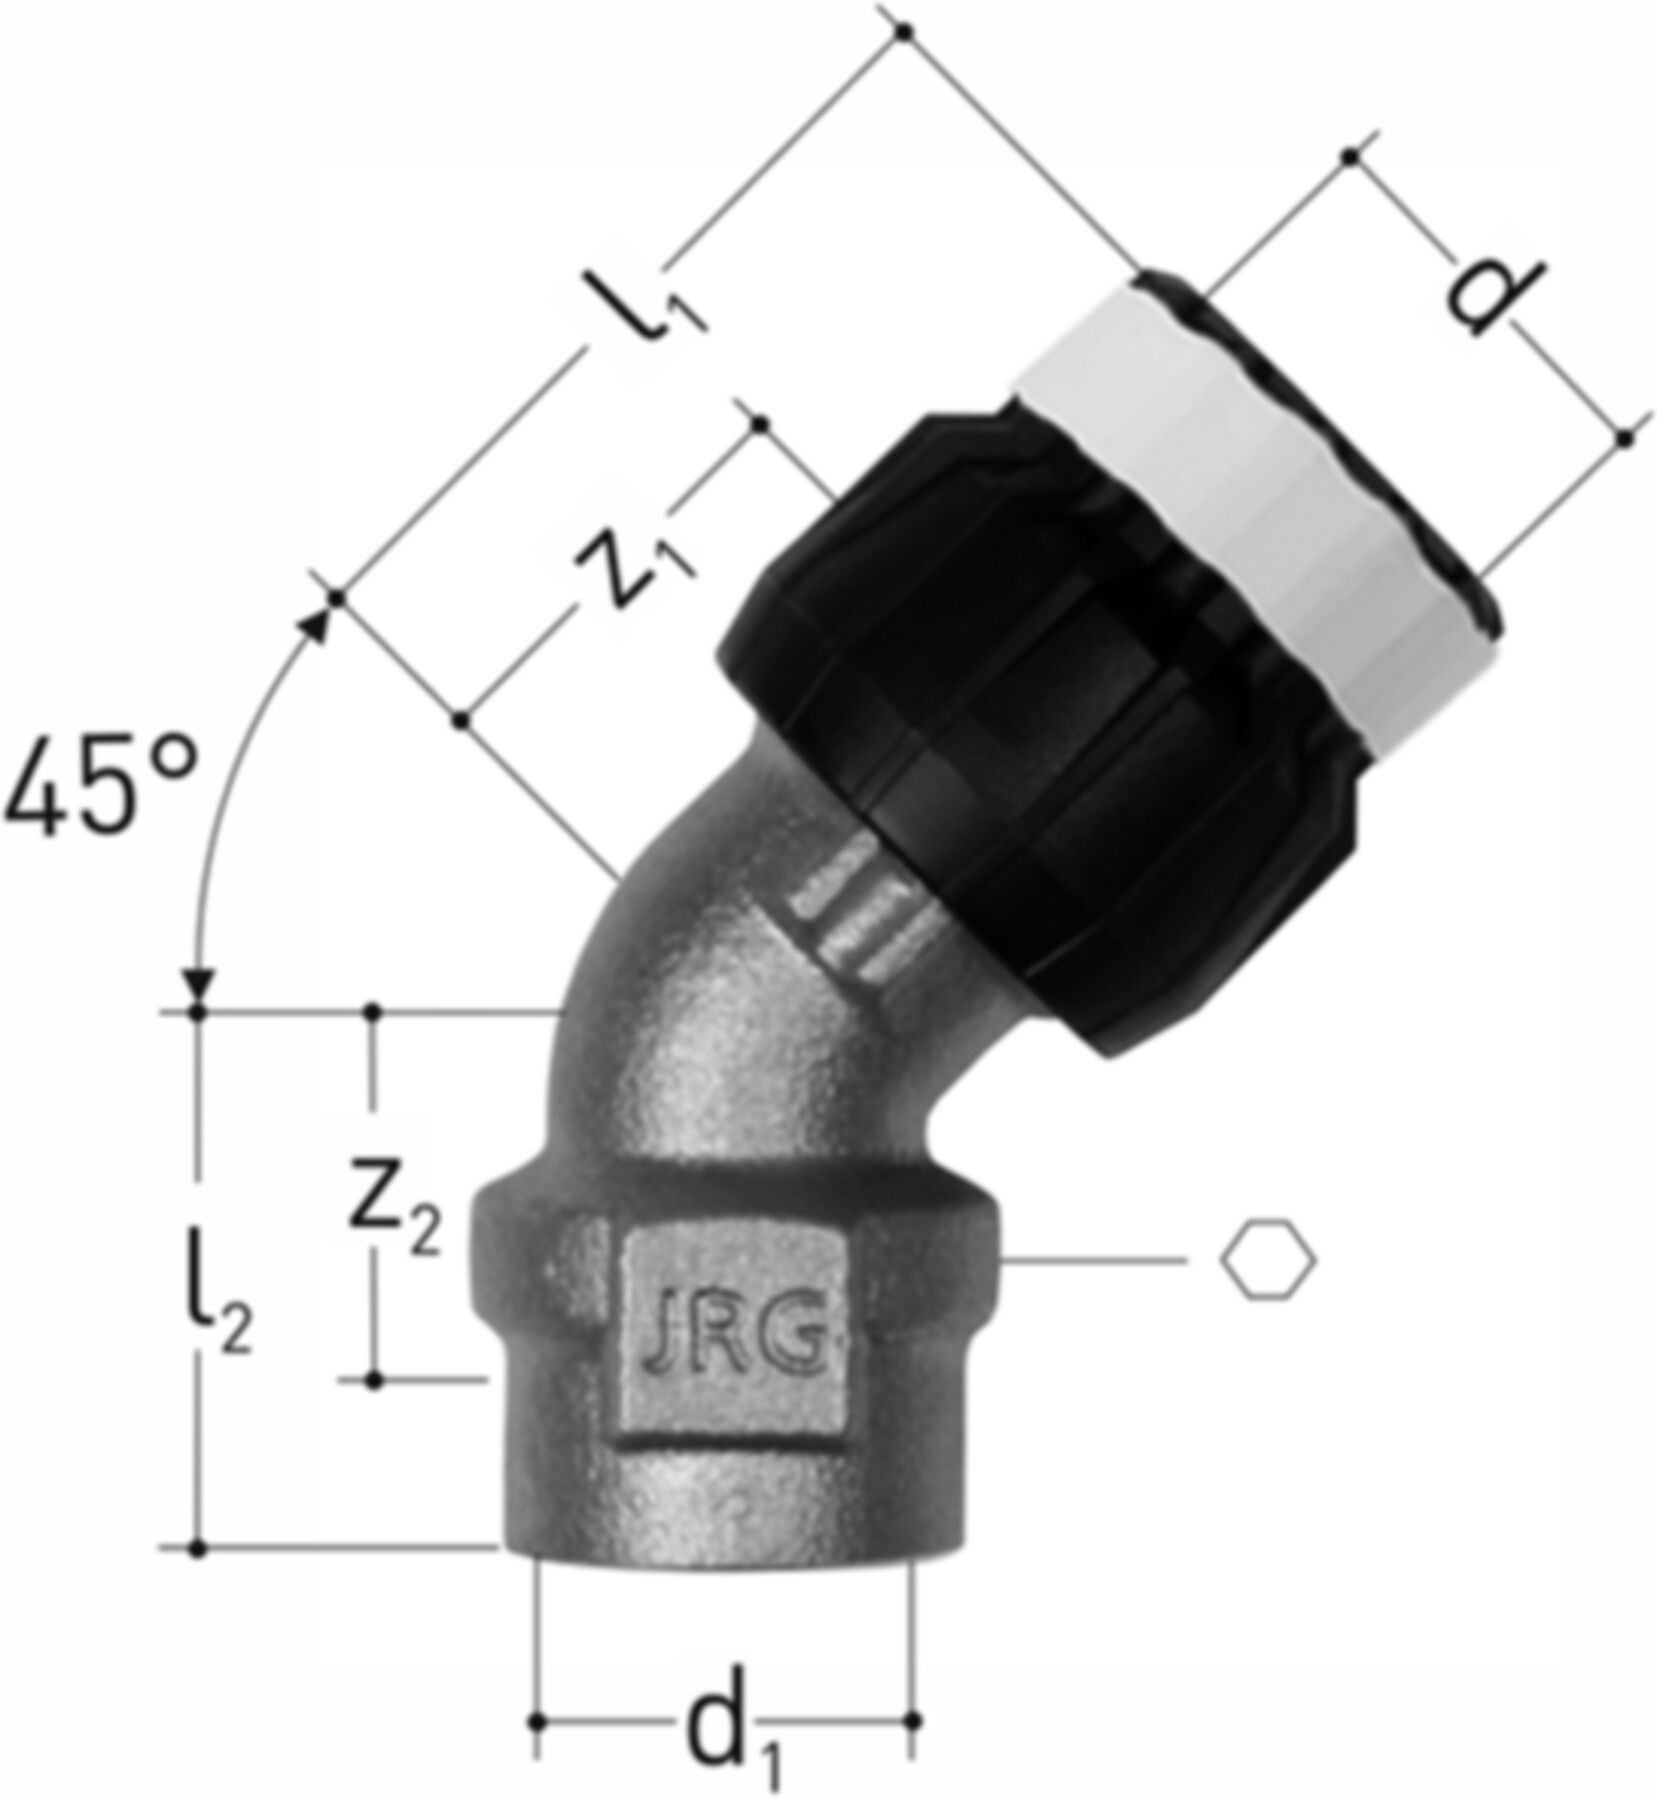 Winkel 45° mit IG 2"-63 4677.610 - JRG Sanipex-MT-Formstücke/Rohre in Stg.